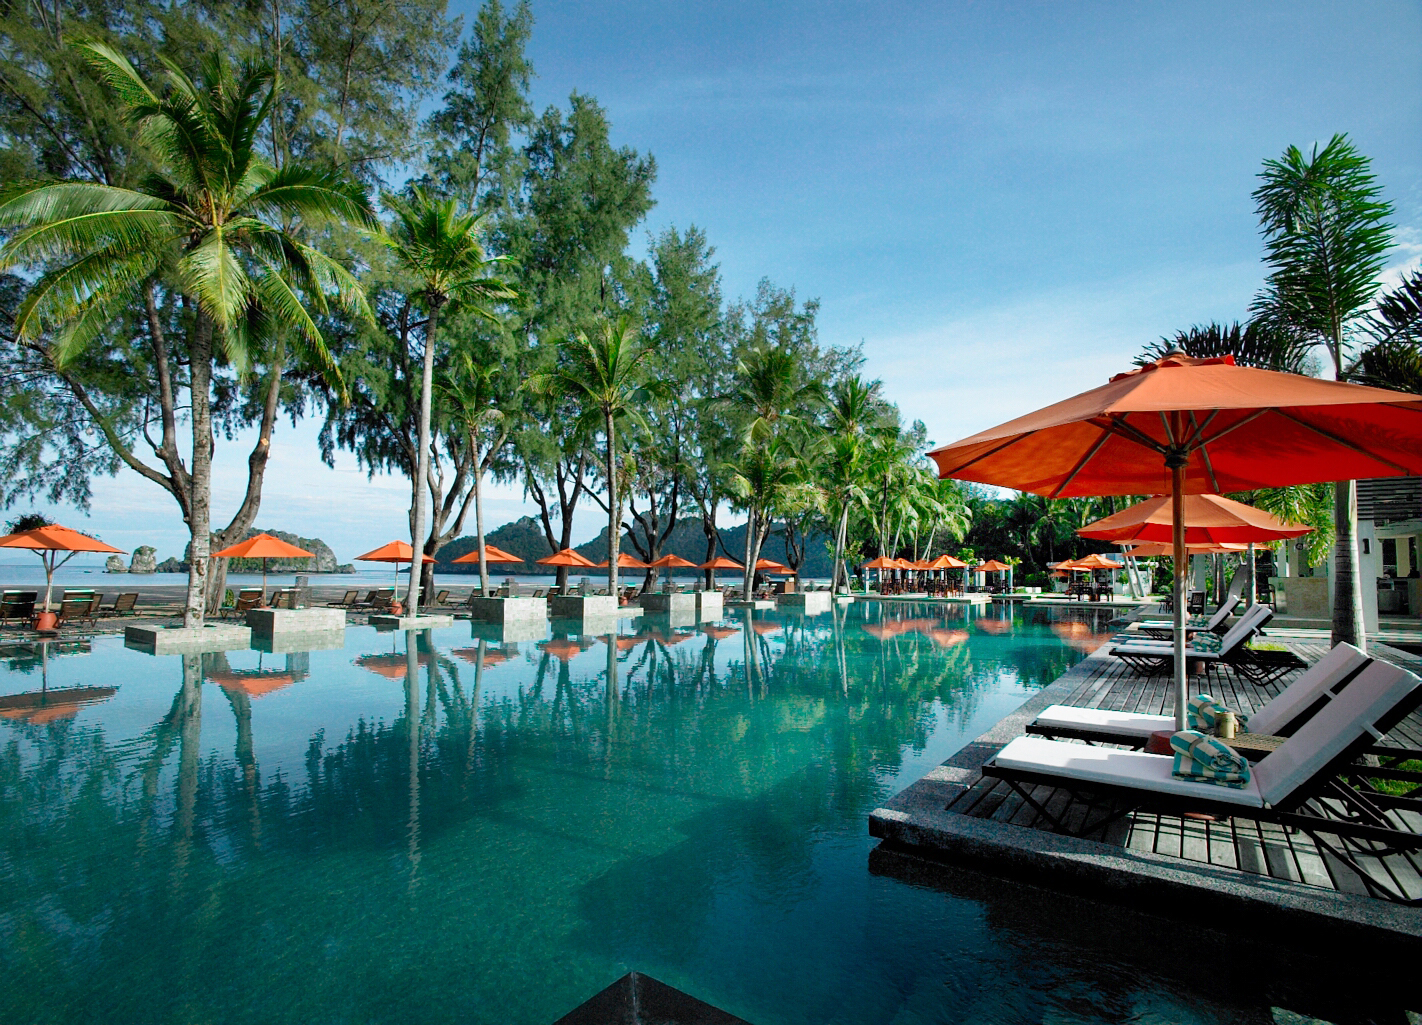 Mdac малайзия. Остров Лангкави Малайзия. Малайзия остров Лангкави отели. Отель Tanjung Rhu Resort. Курорт Лангкави (Малаккский пролив).